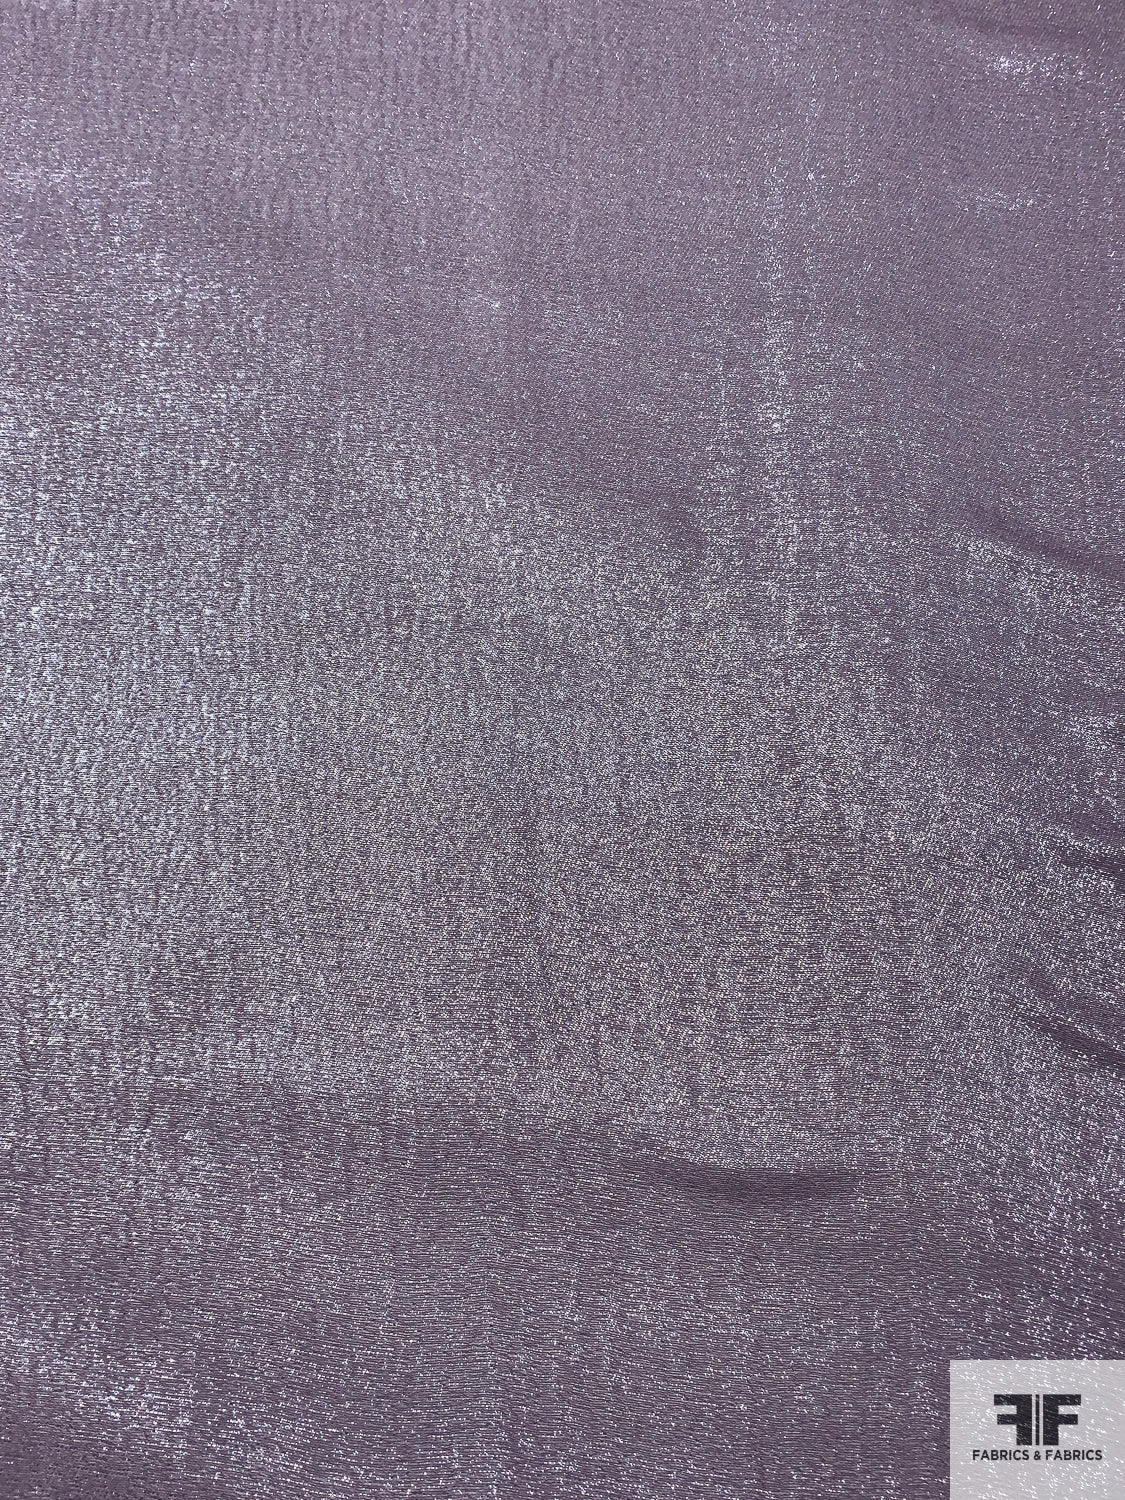 J Mendel Italian Lurex Pinstriped Silk Chiffon - Shimmery Lavender